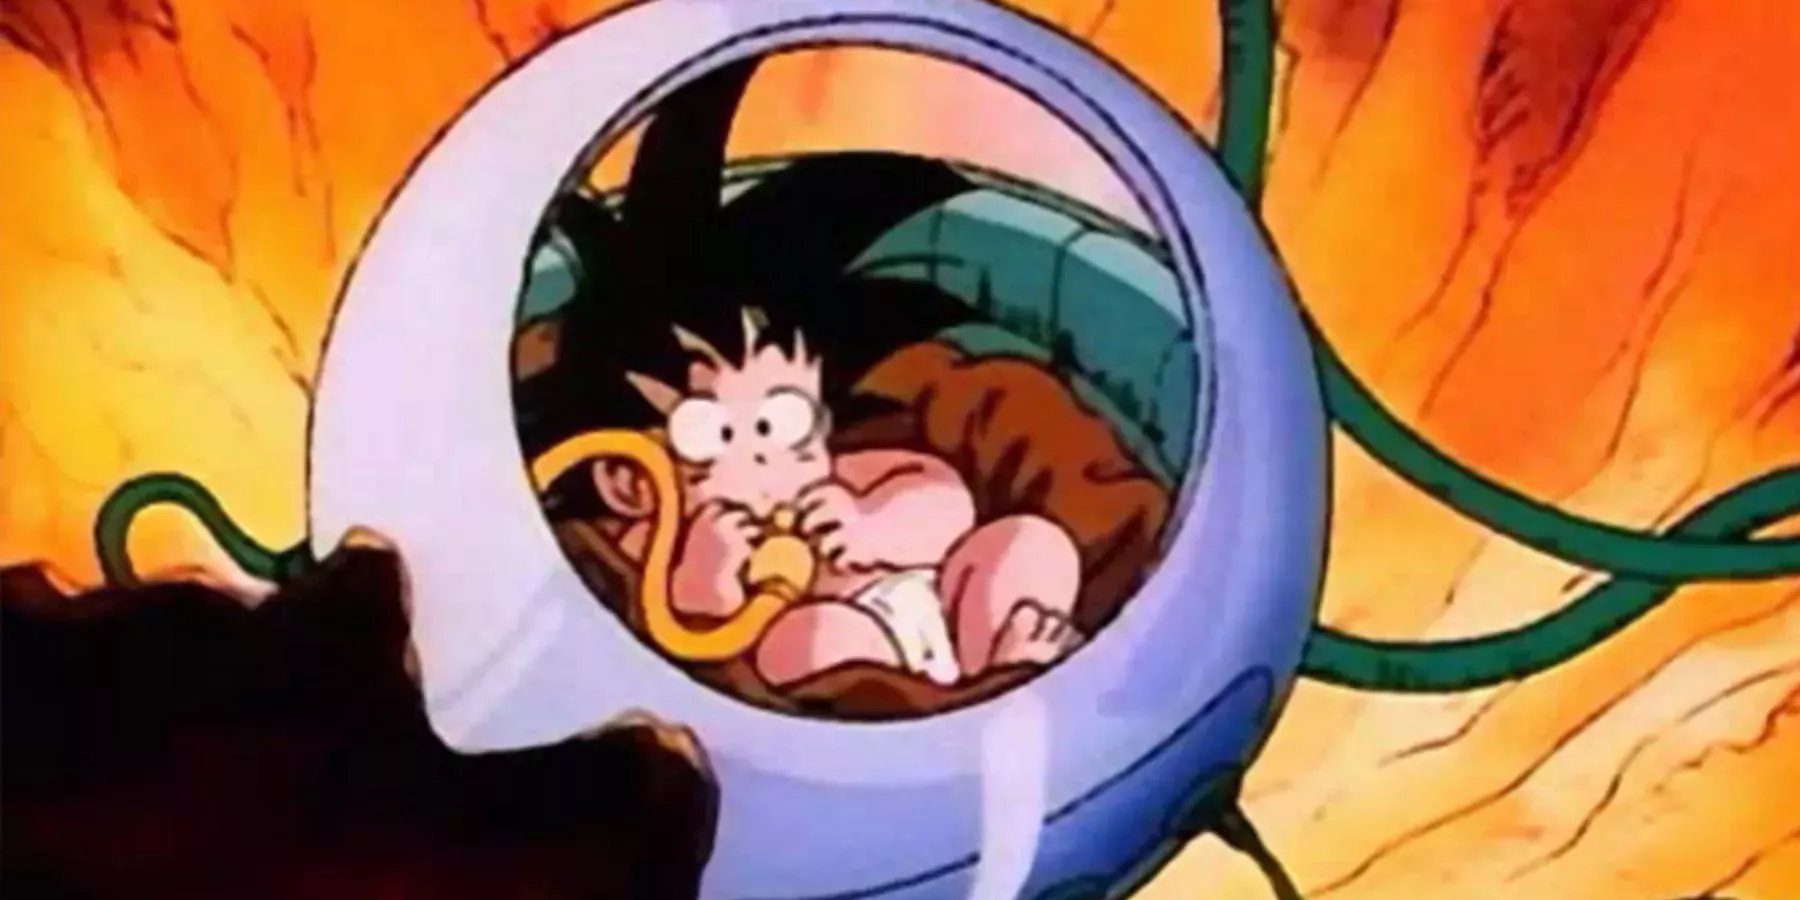 Las 10 peores cosas que le ocurrieron a Goku en Dragon Ball, clasificadas |  Cultture